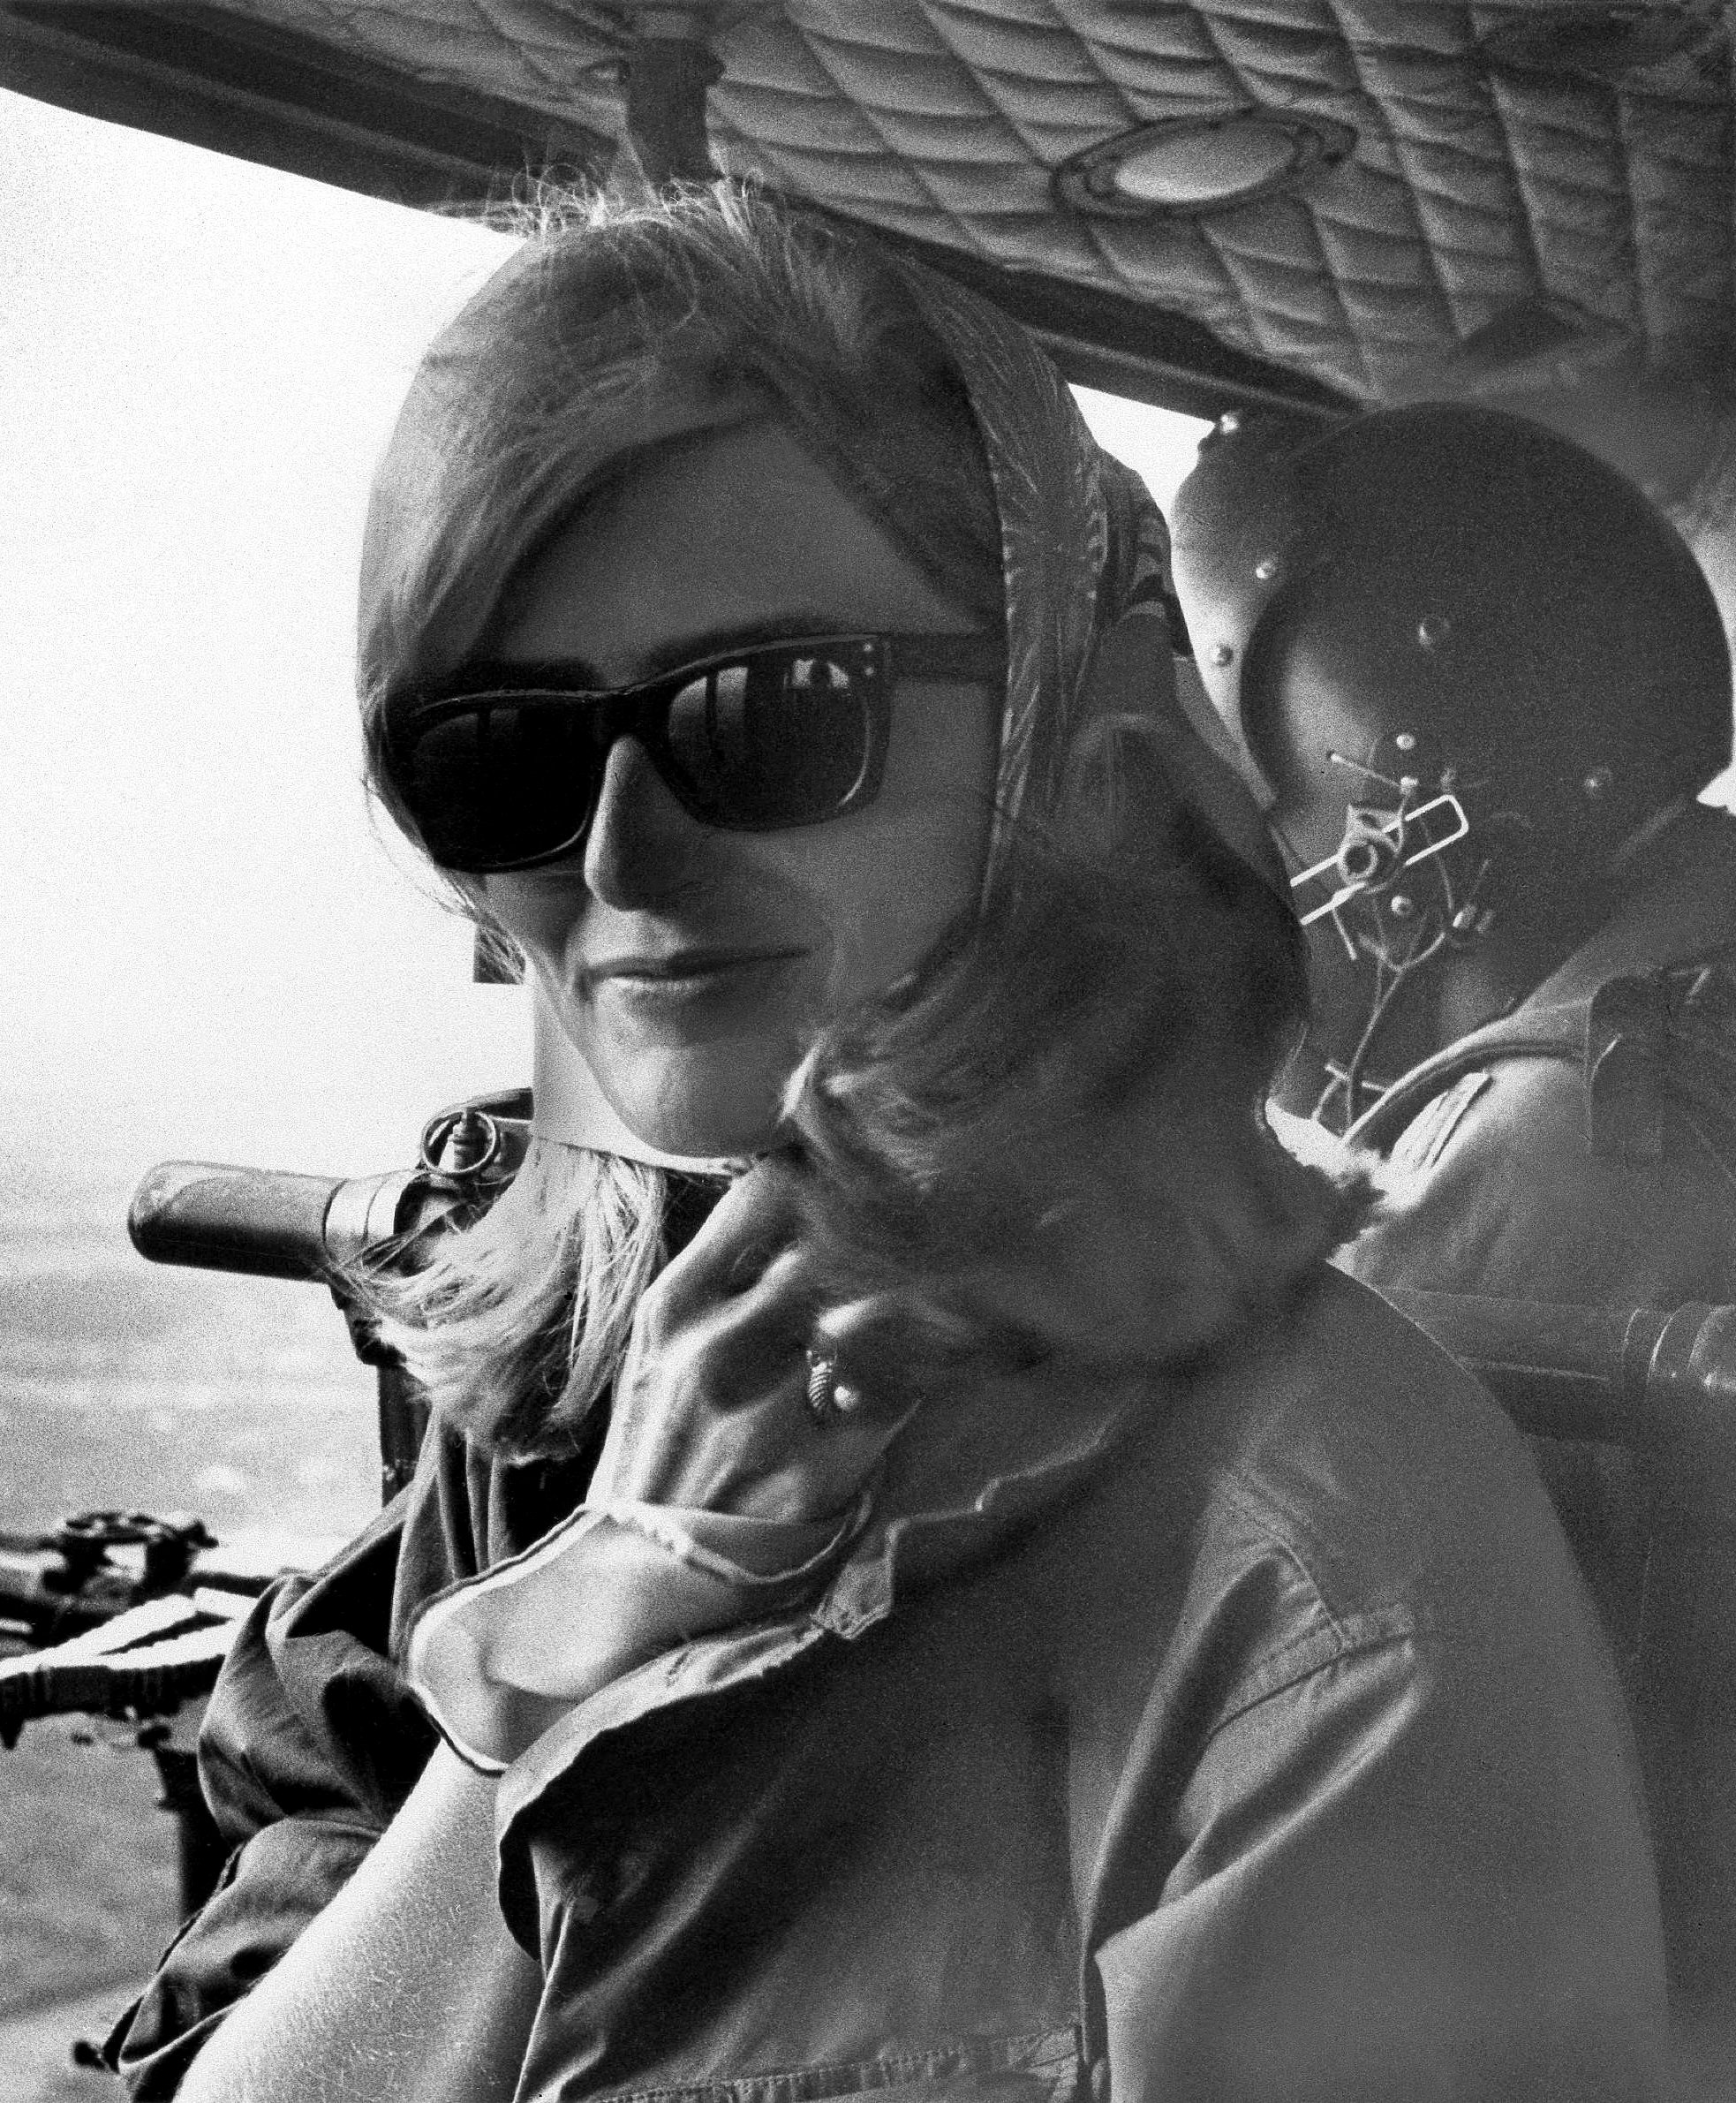 0001_1967_Kelly Smith in Vietnam.JPG